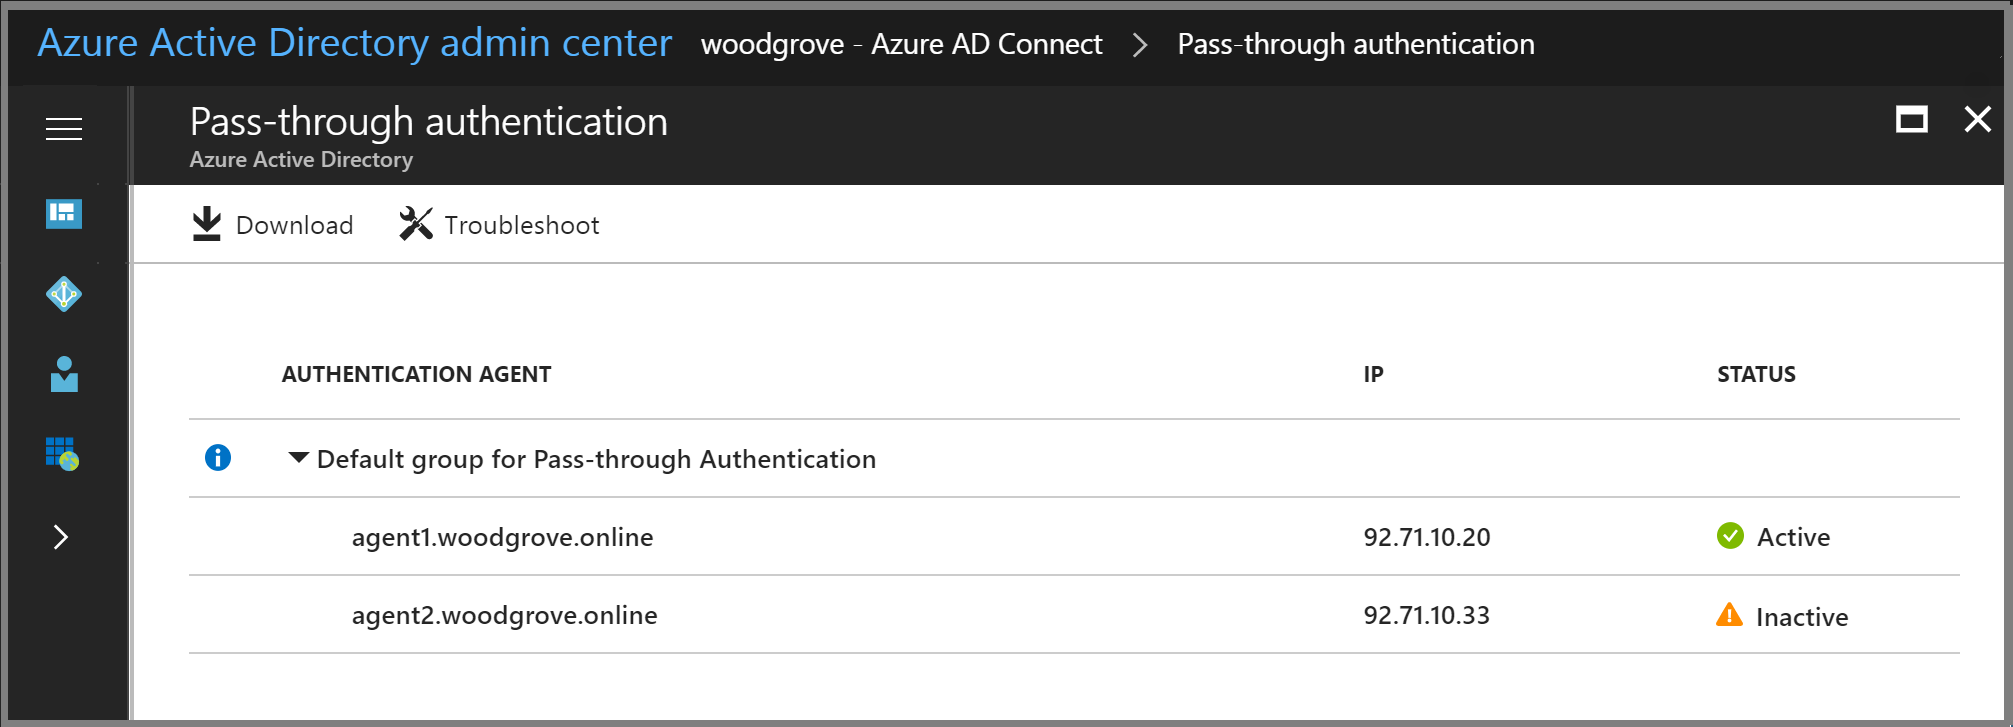 Azure Active Directory admin center - Pass-through Authentication blade